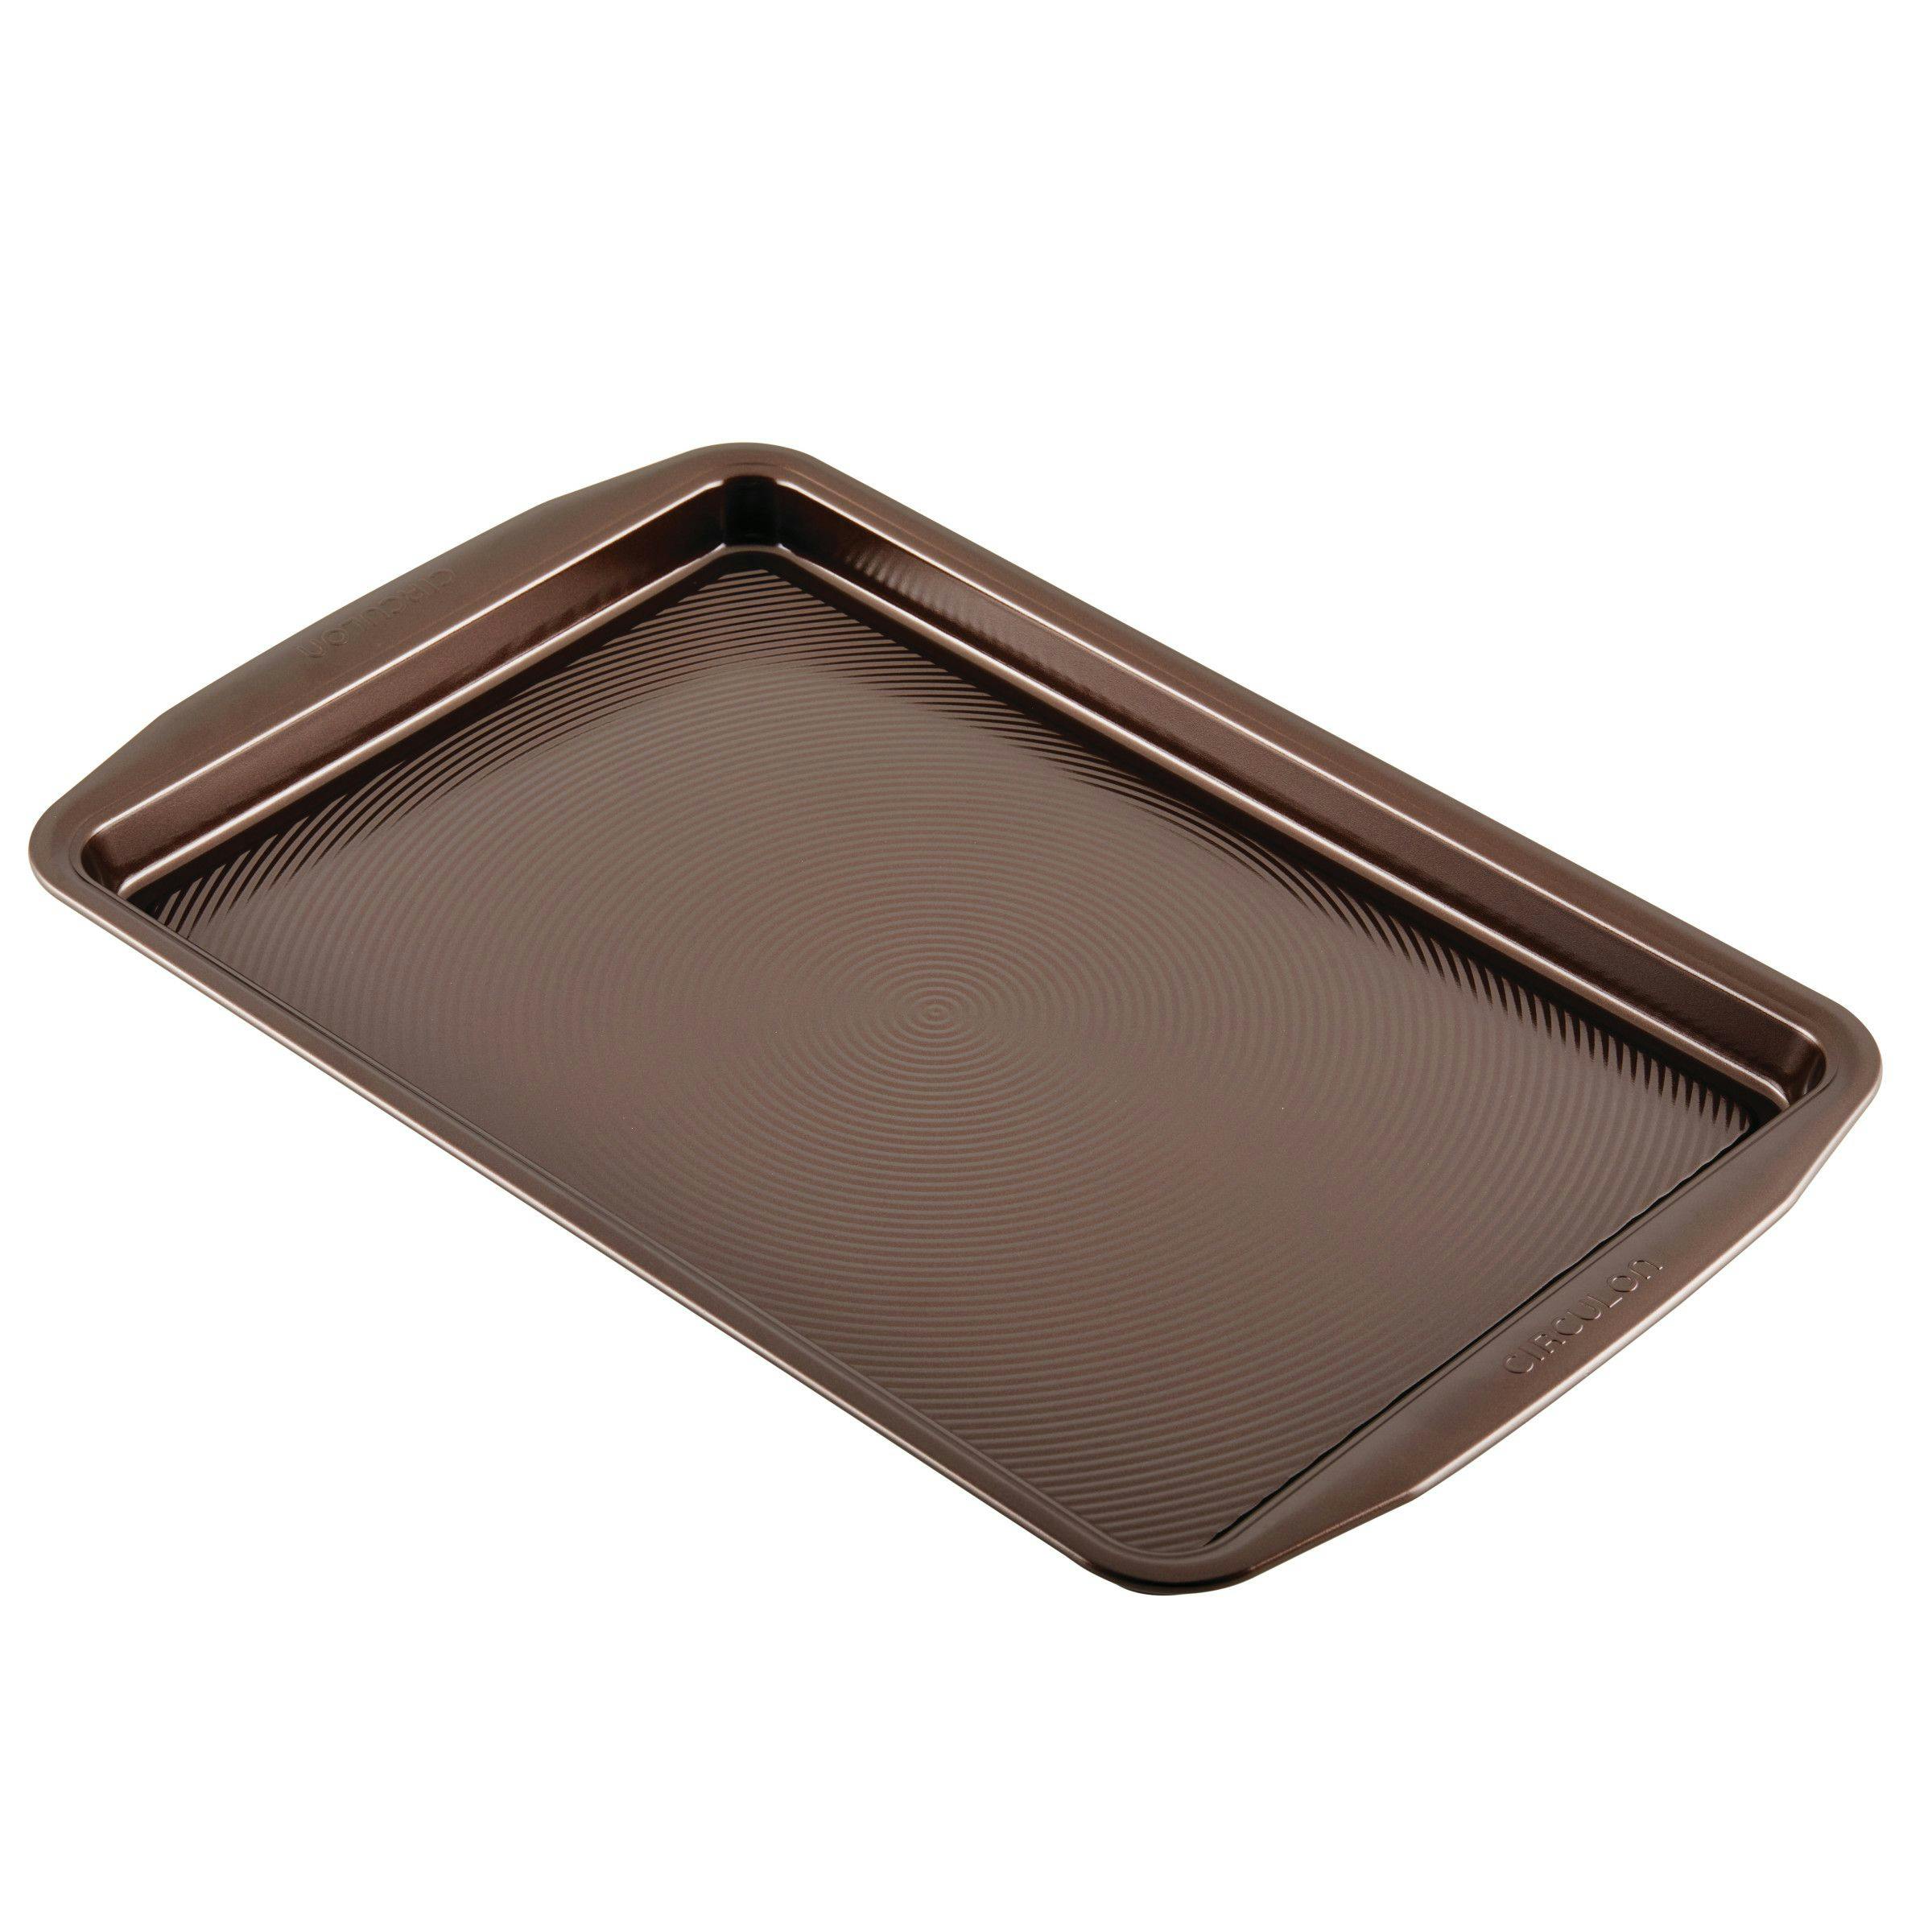 Circulon Bakeware Nonstick Cookie Pan, 11-Inch x 17-Inch, Chocolate Brown